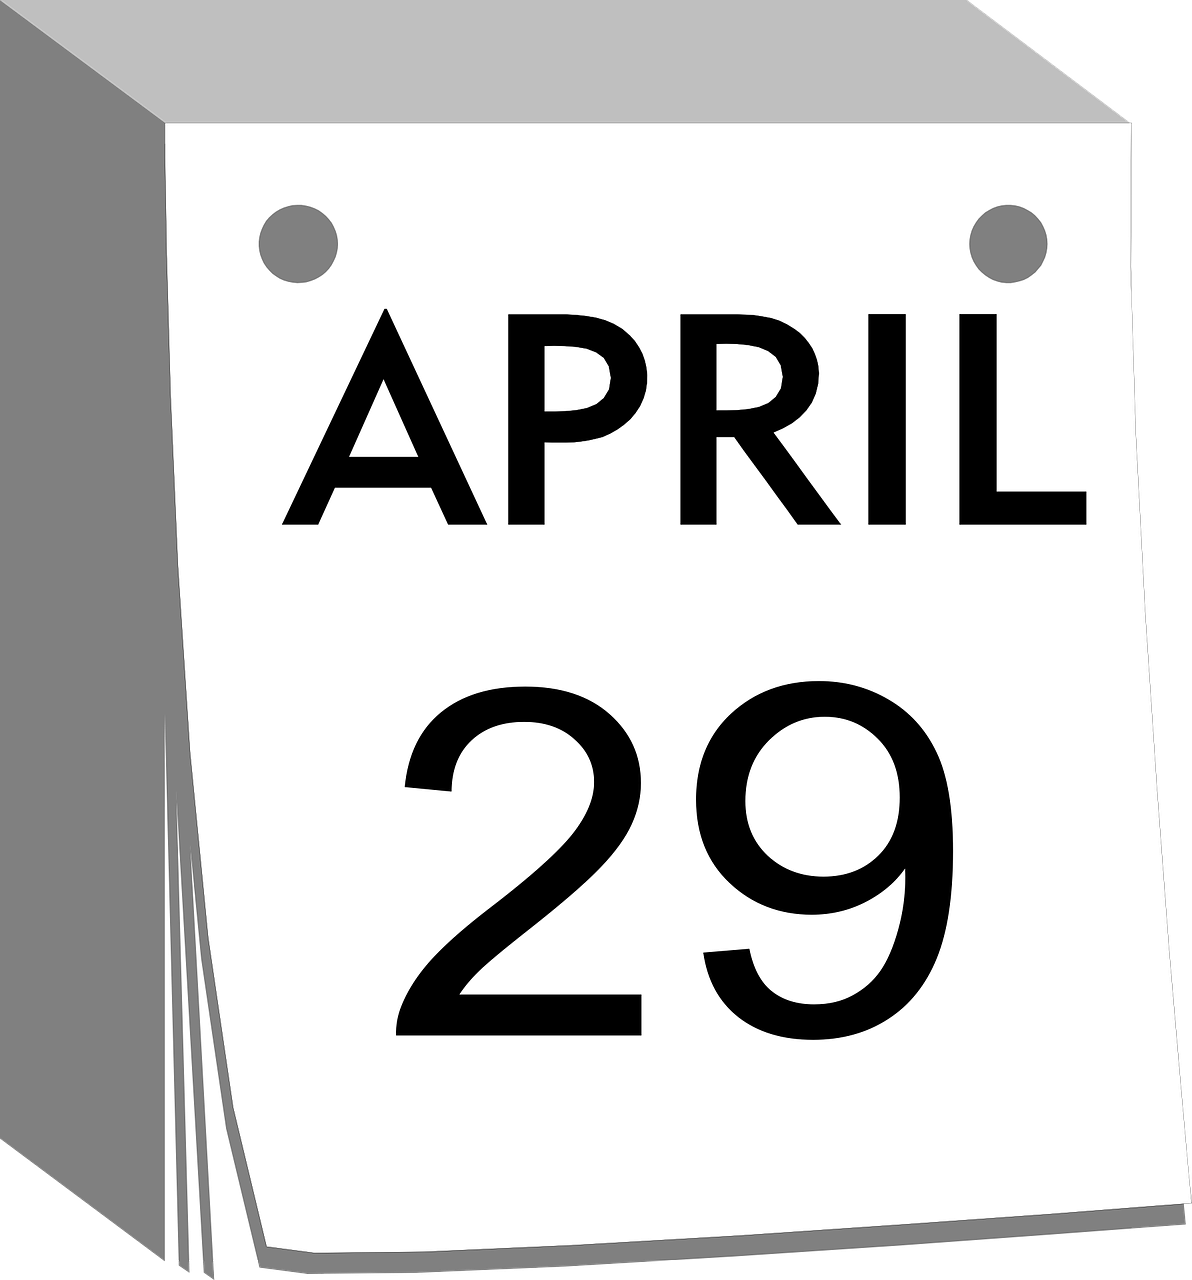 29 апреля день календаря. 29 Апреля календарь. Календарь картинка. Дата картинка. 29 Апреля лист календаря.